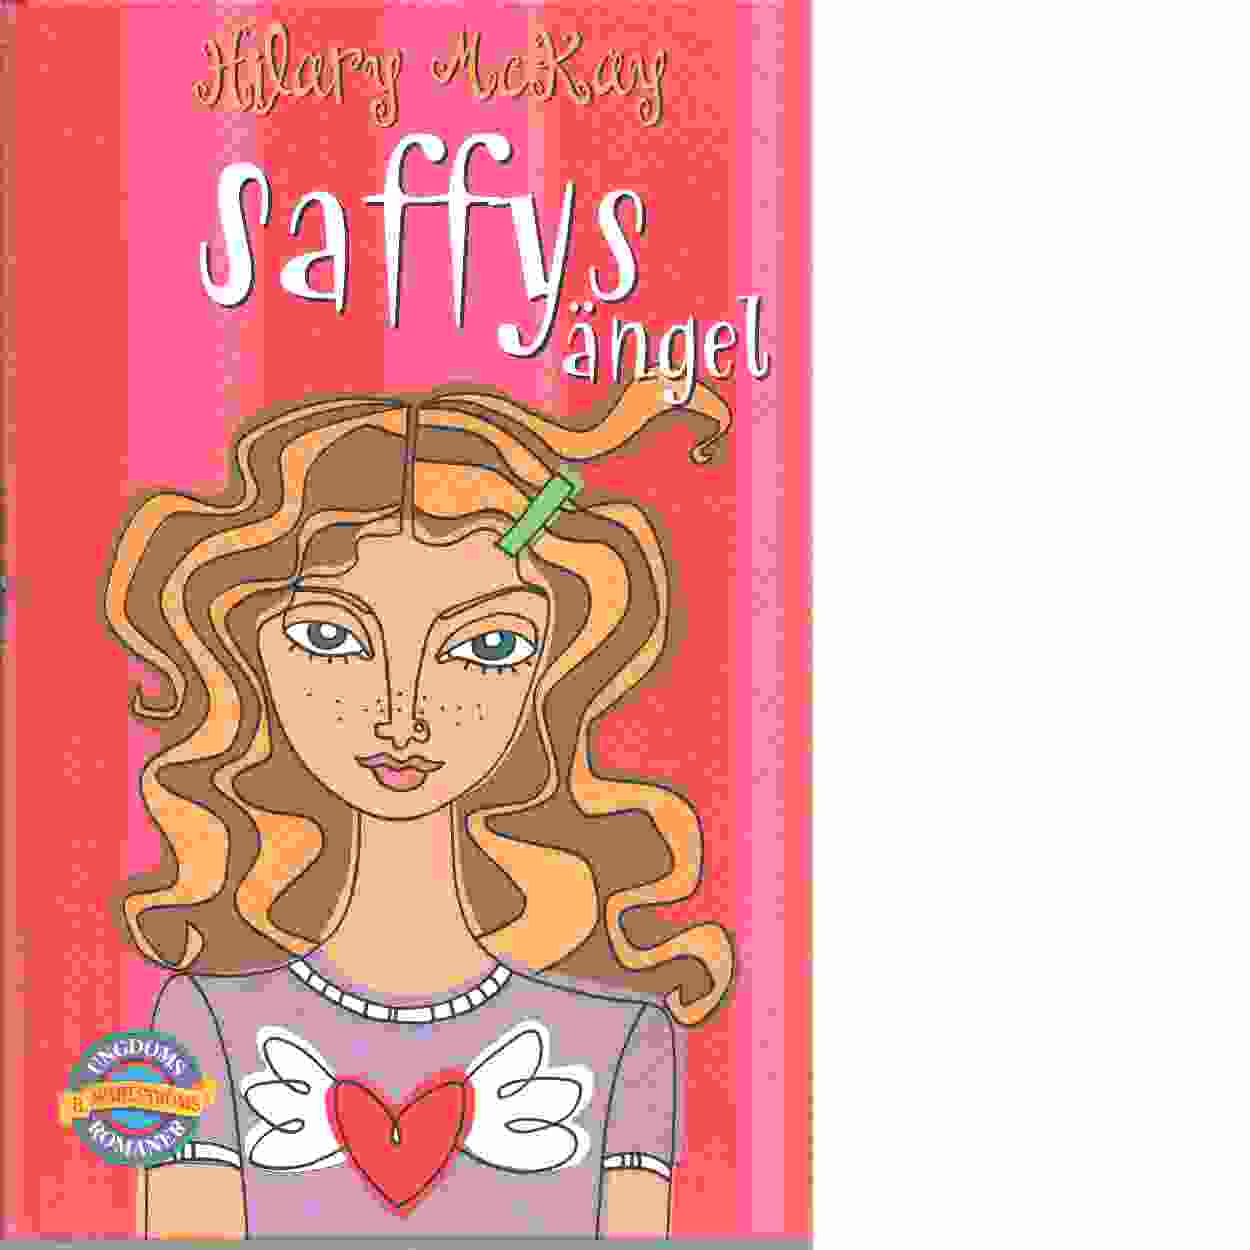 Saffys ängel  - McKay, Hilary